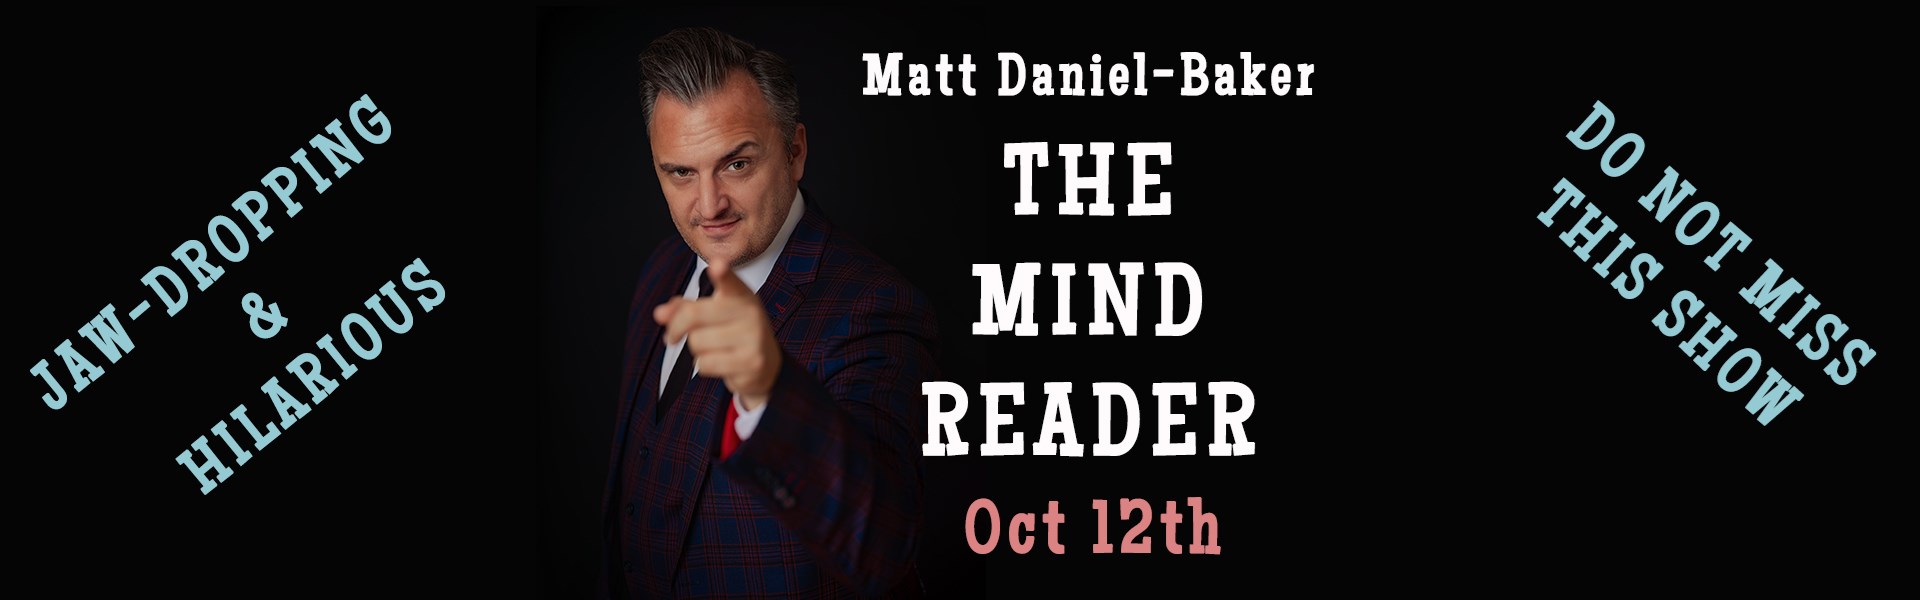 Matt Daniel Baker - The Mind Reader